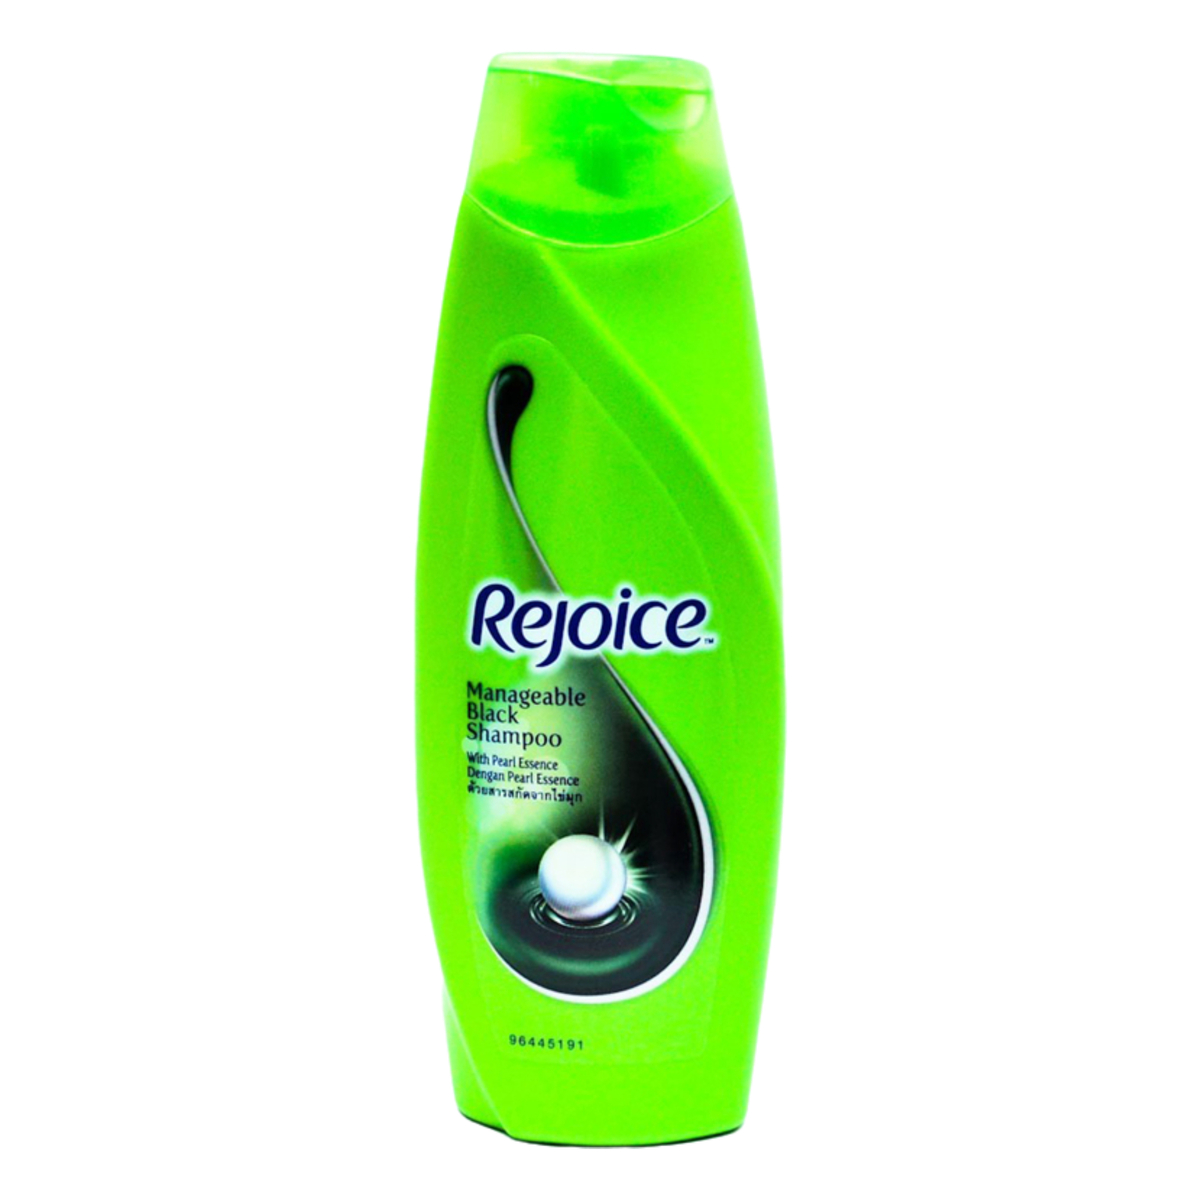 Rejoice Shampoo Manageable Black 170ml